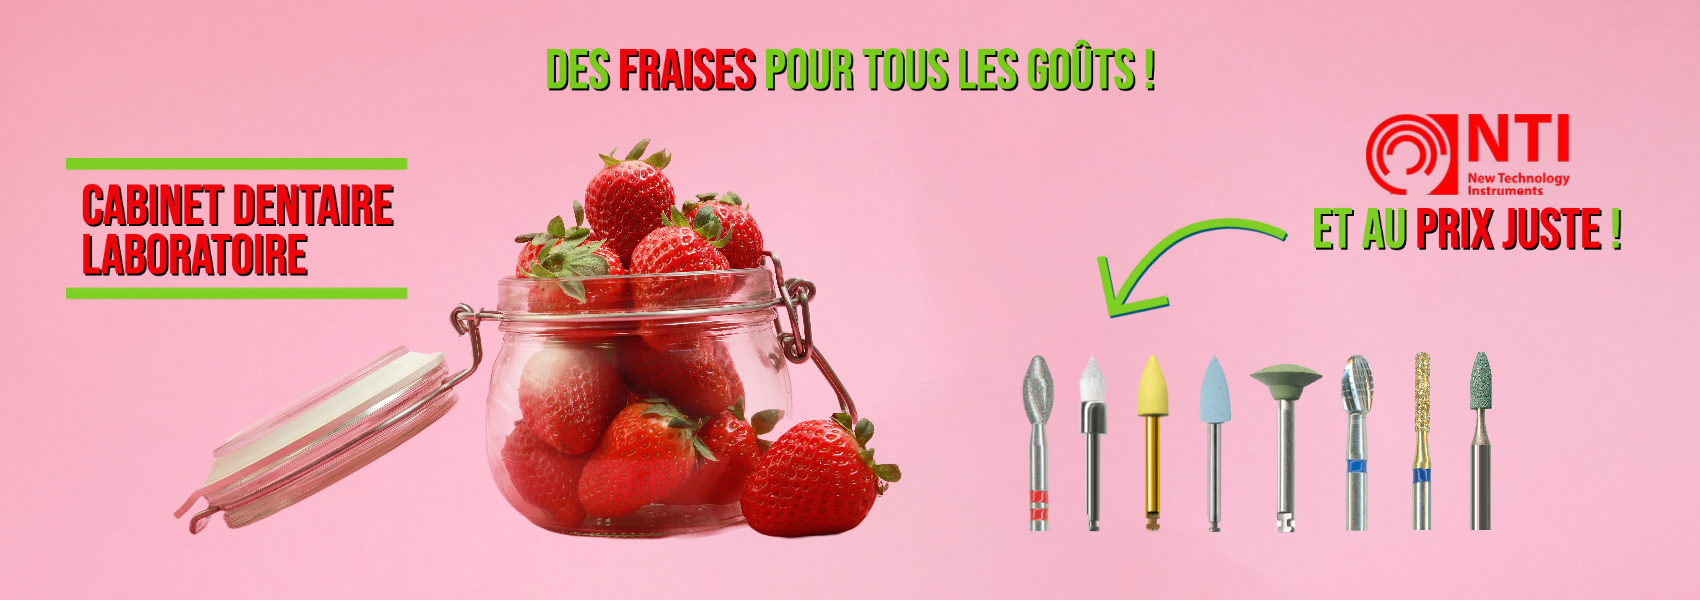 slide-fraise-dentaire-materiel-fournisseur-france-promo